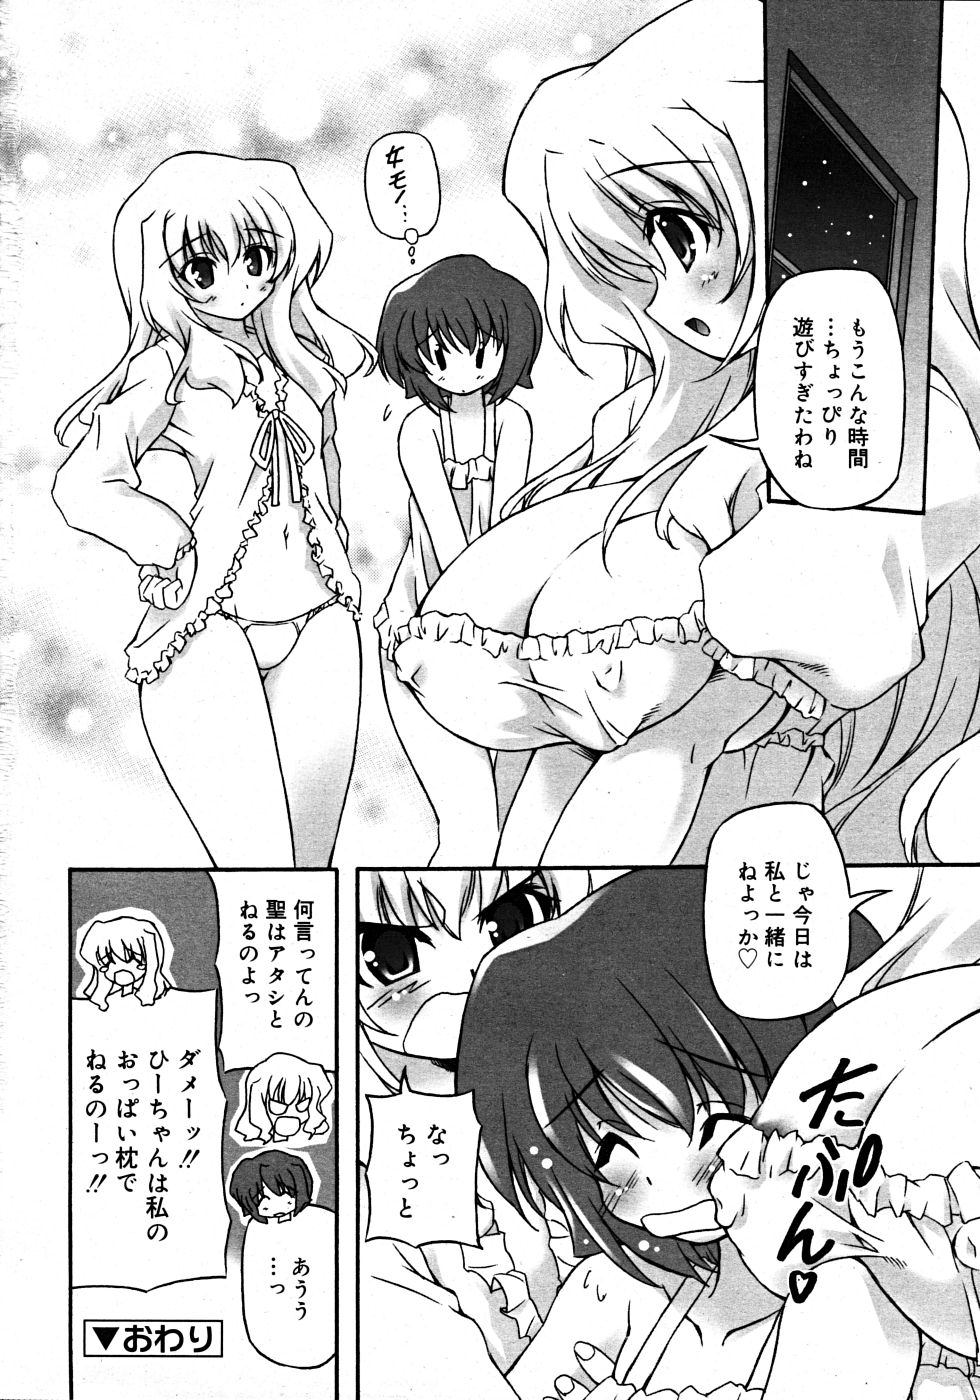 Comic Rin Vol. 33 2007年 9月